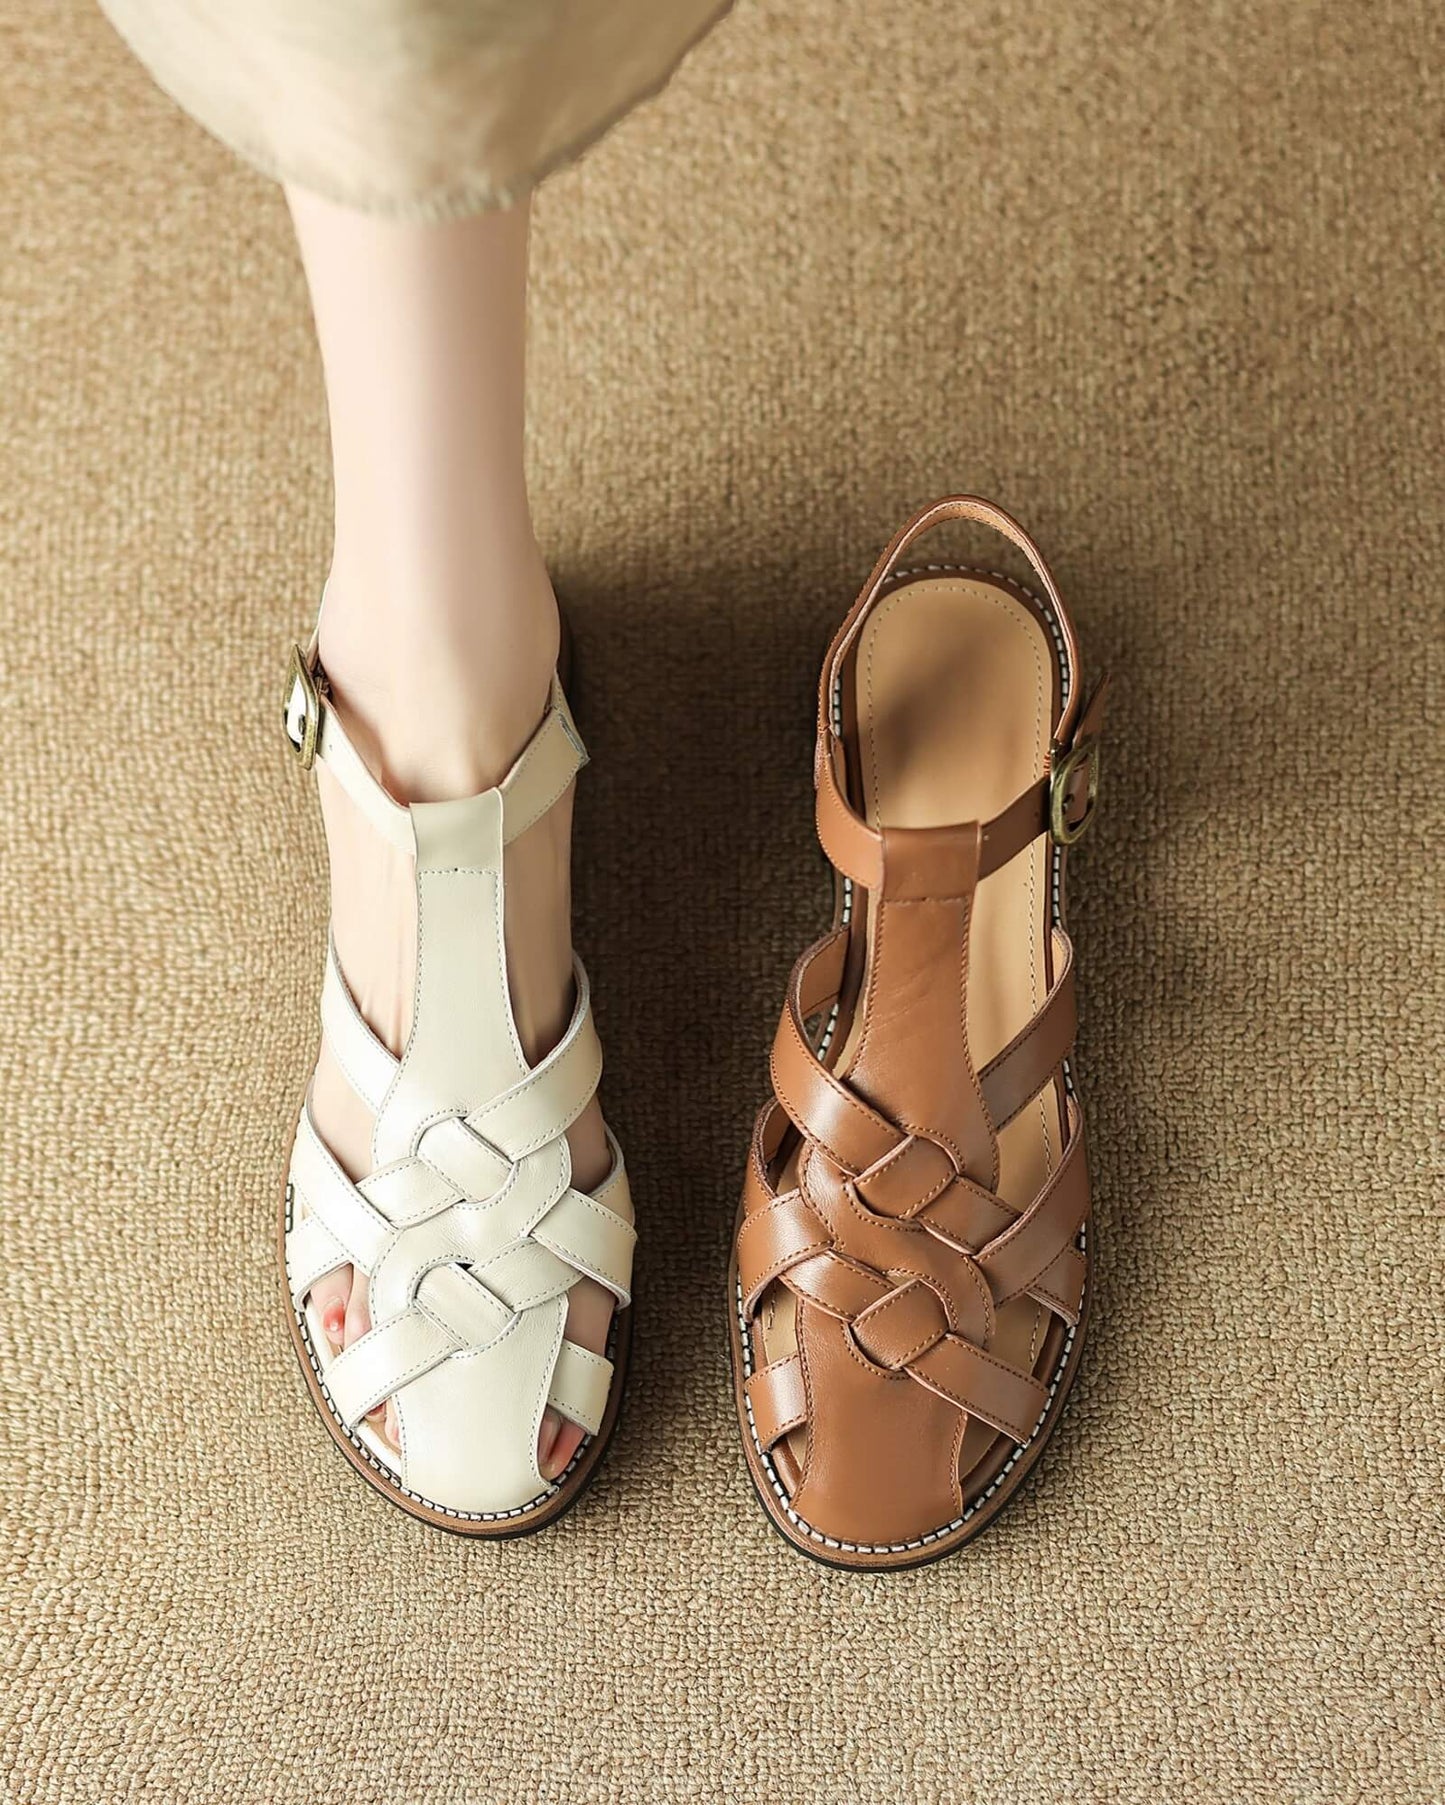 Lola - Woven Sandals